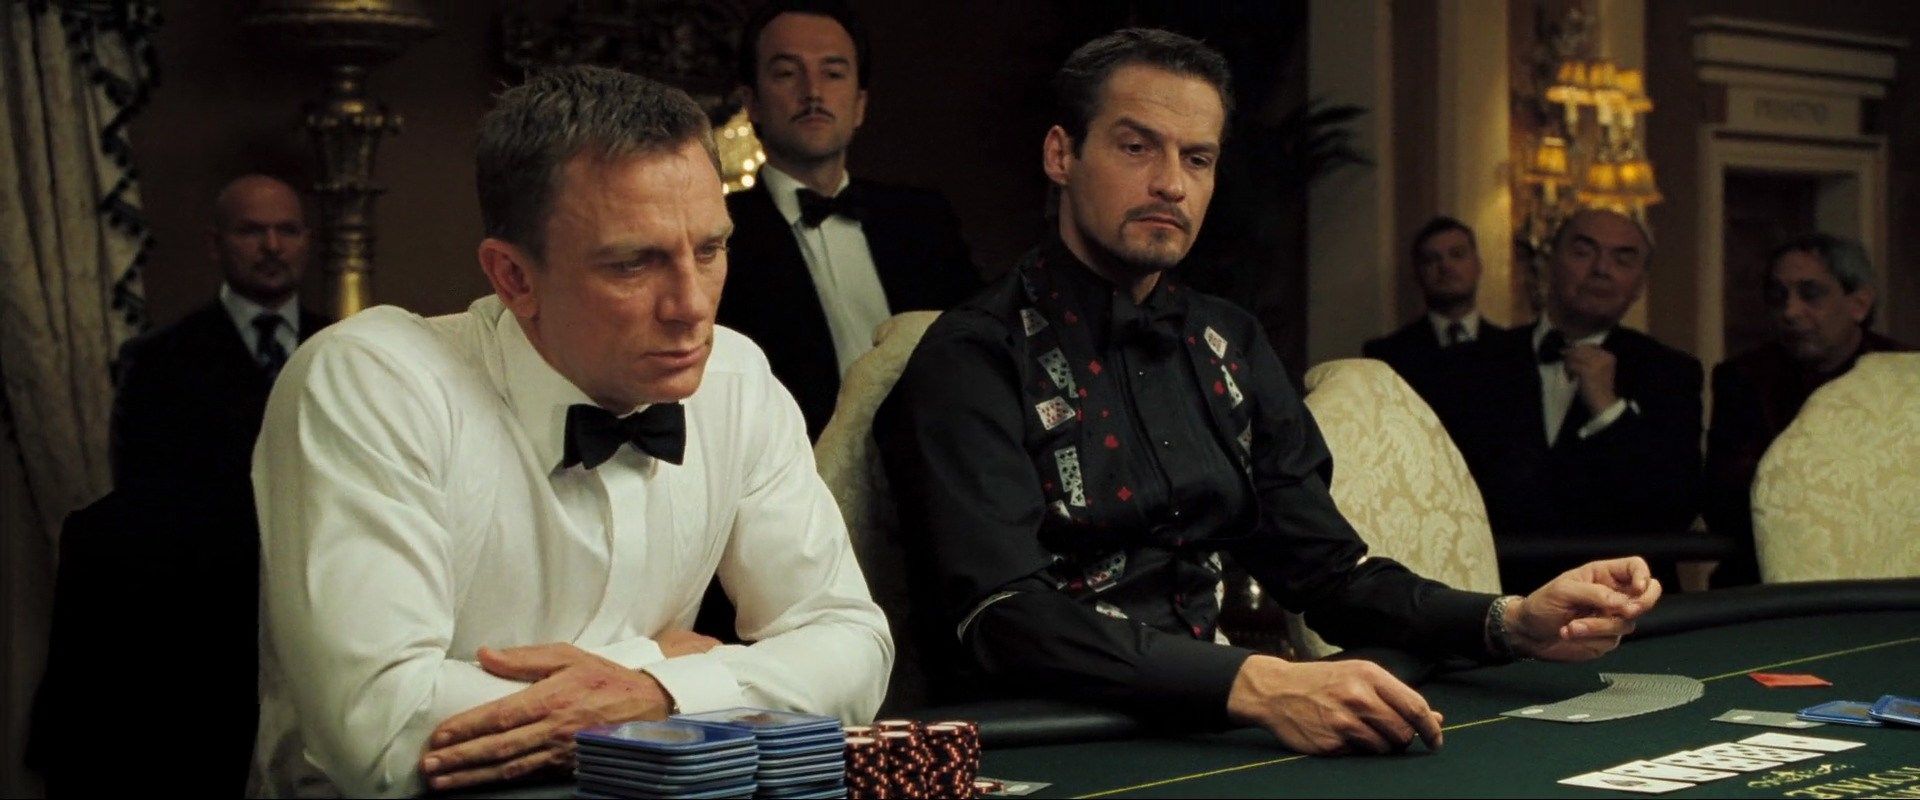 casino royale poker scenes